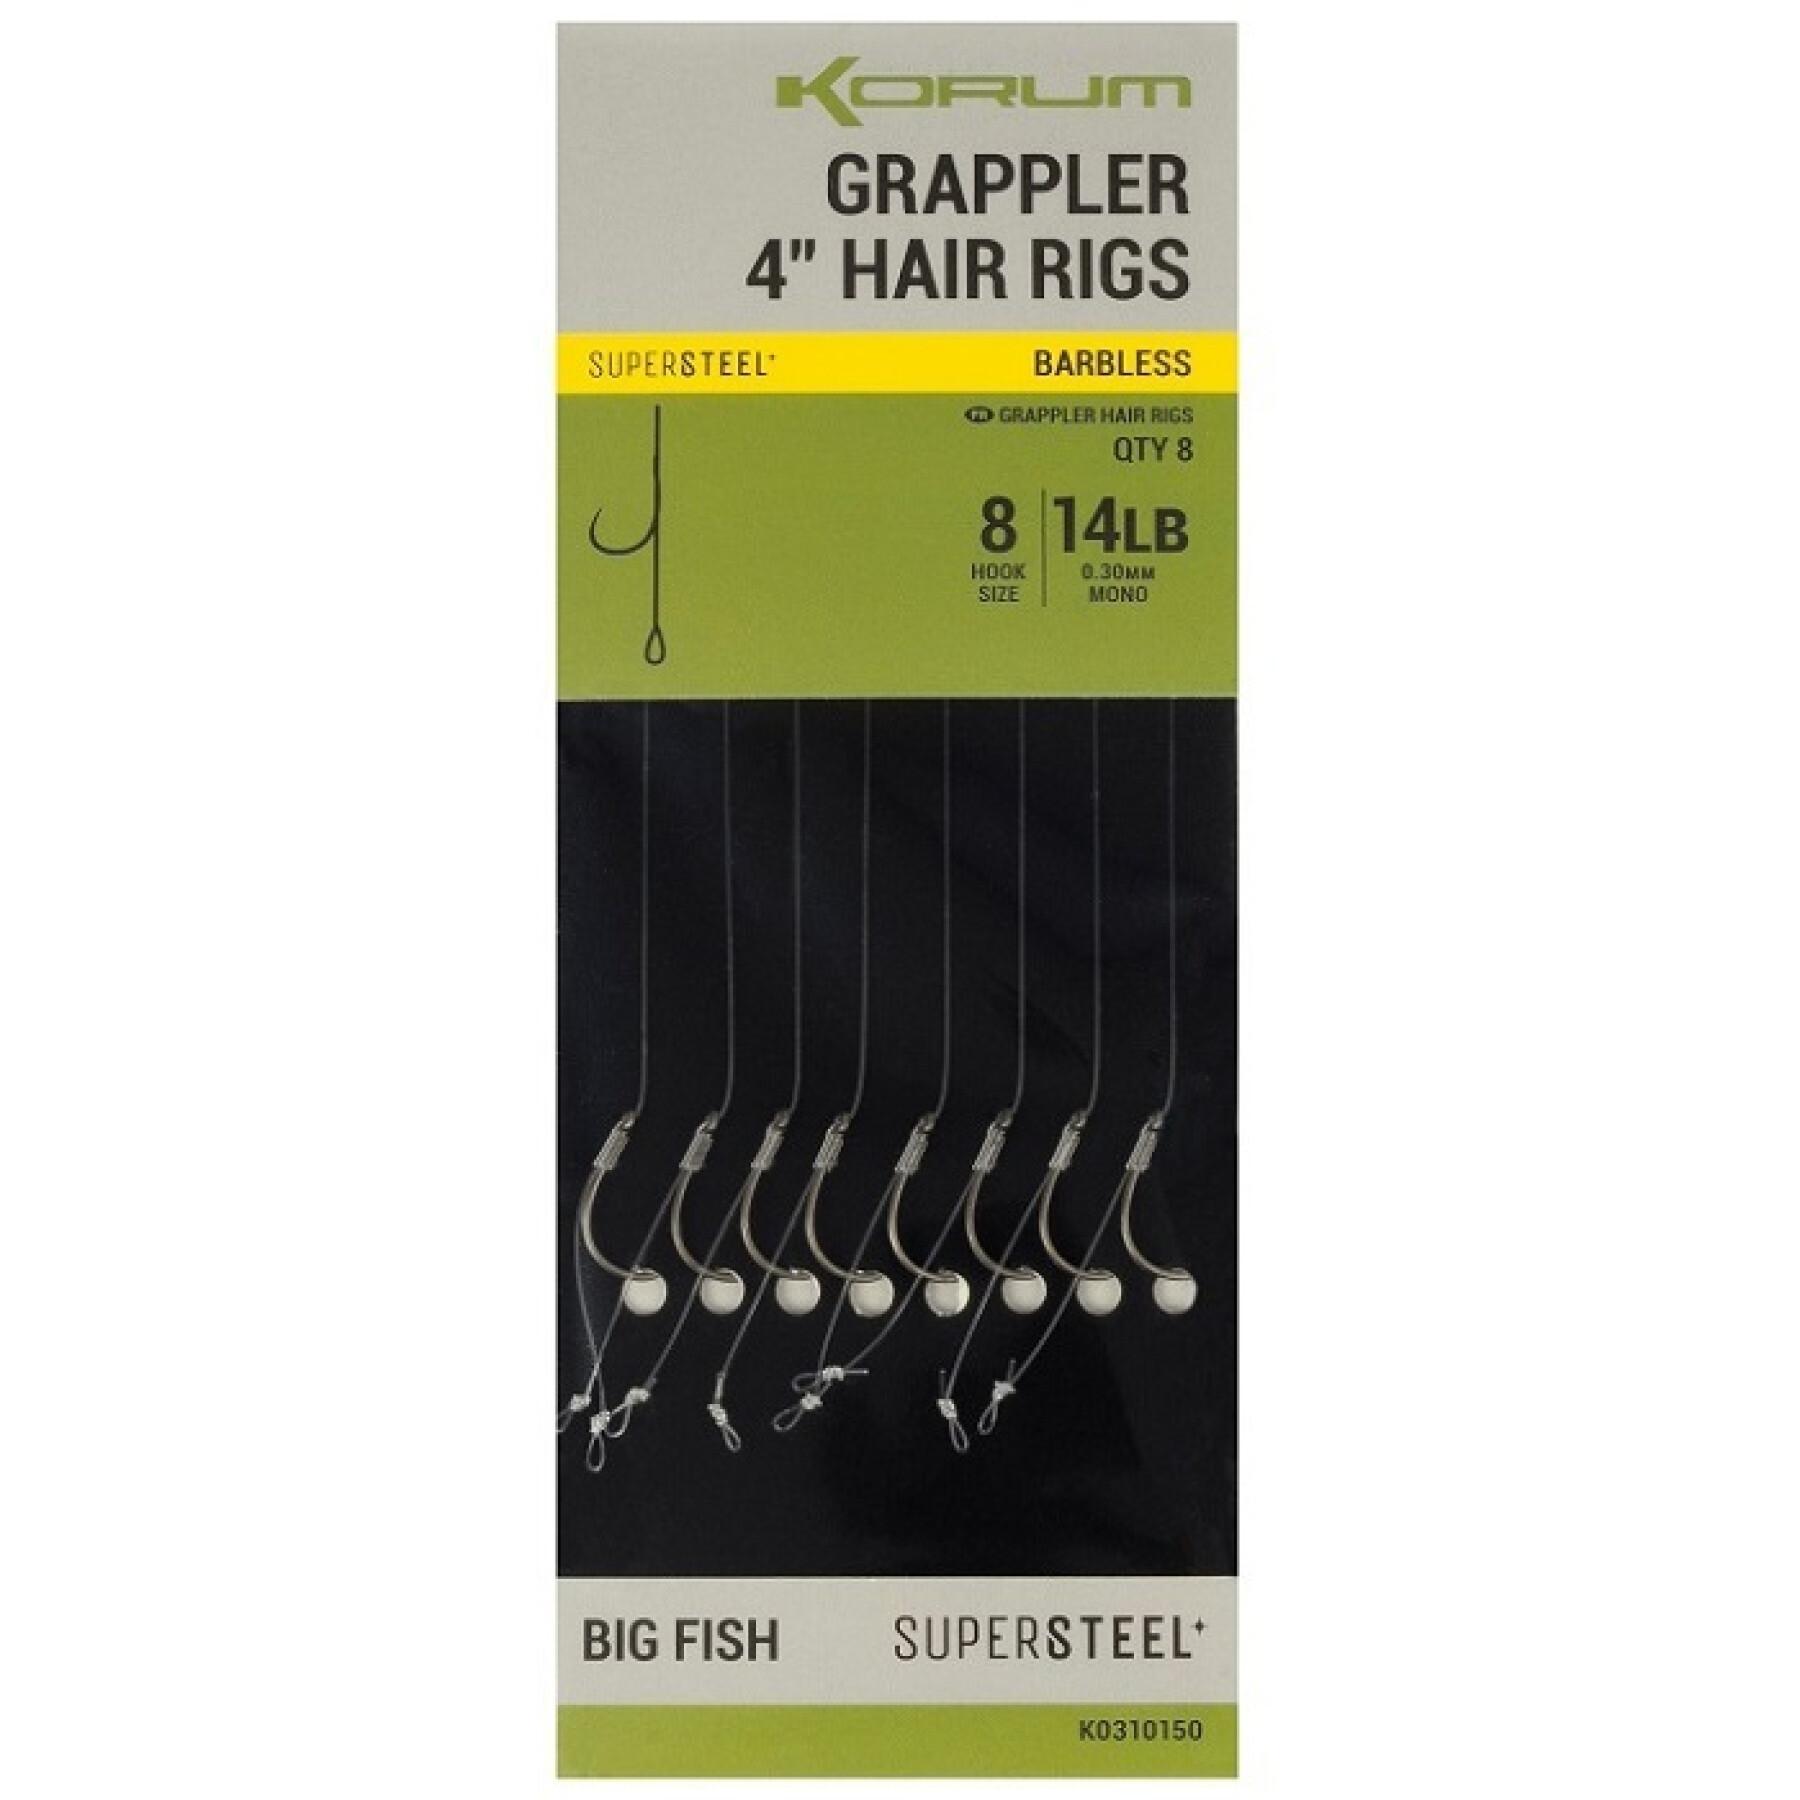 Schlaghaken Korum Grappler Hair Rigs 4 Barbless x5